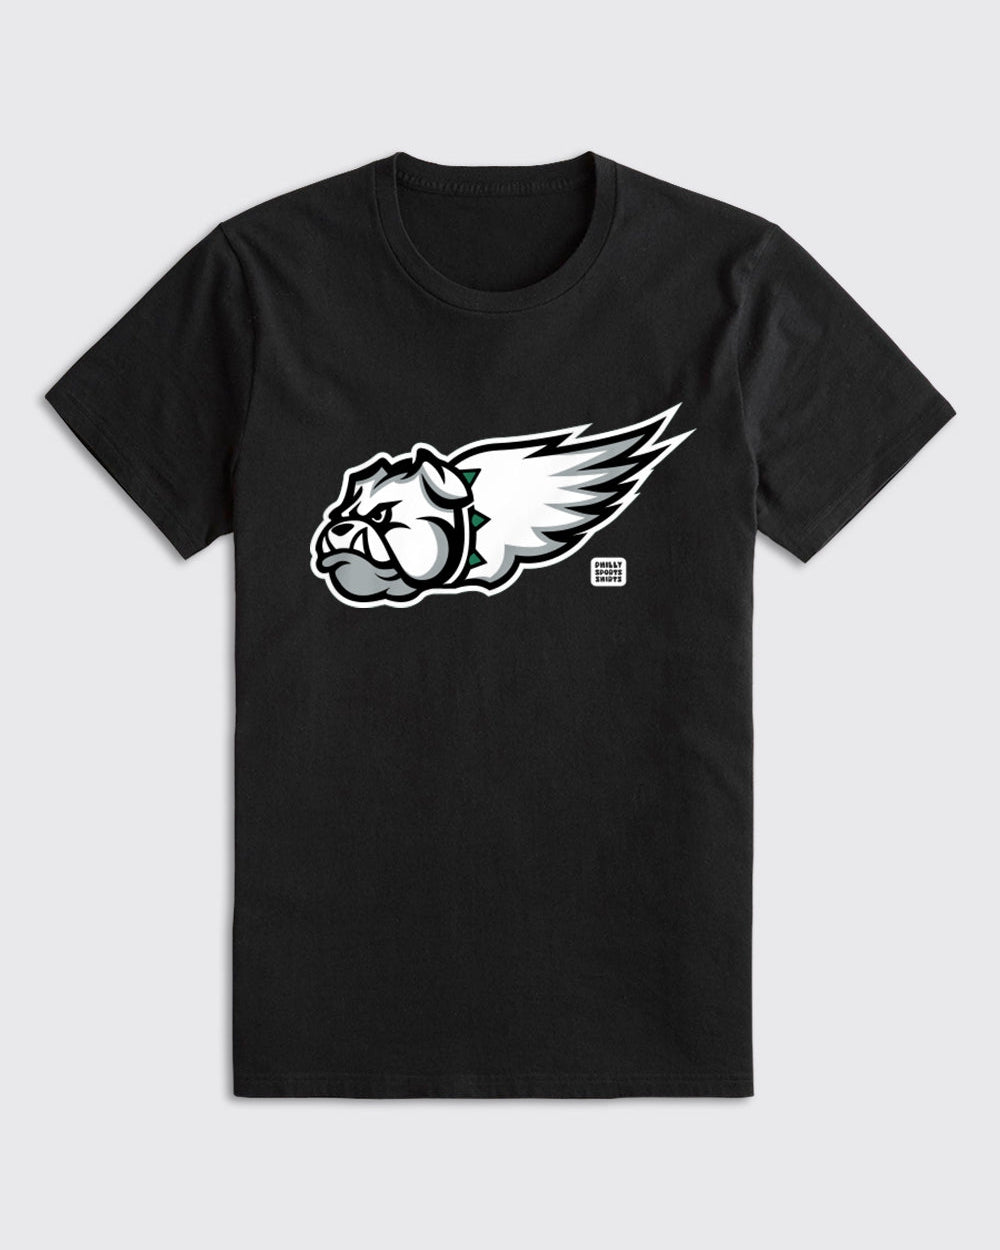 Eagles Georgia North Shirt - Eagles, T-Shirts - Philly Sports Shirts